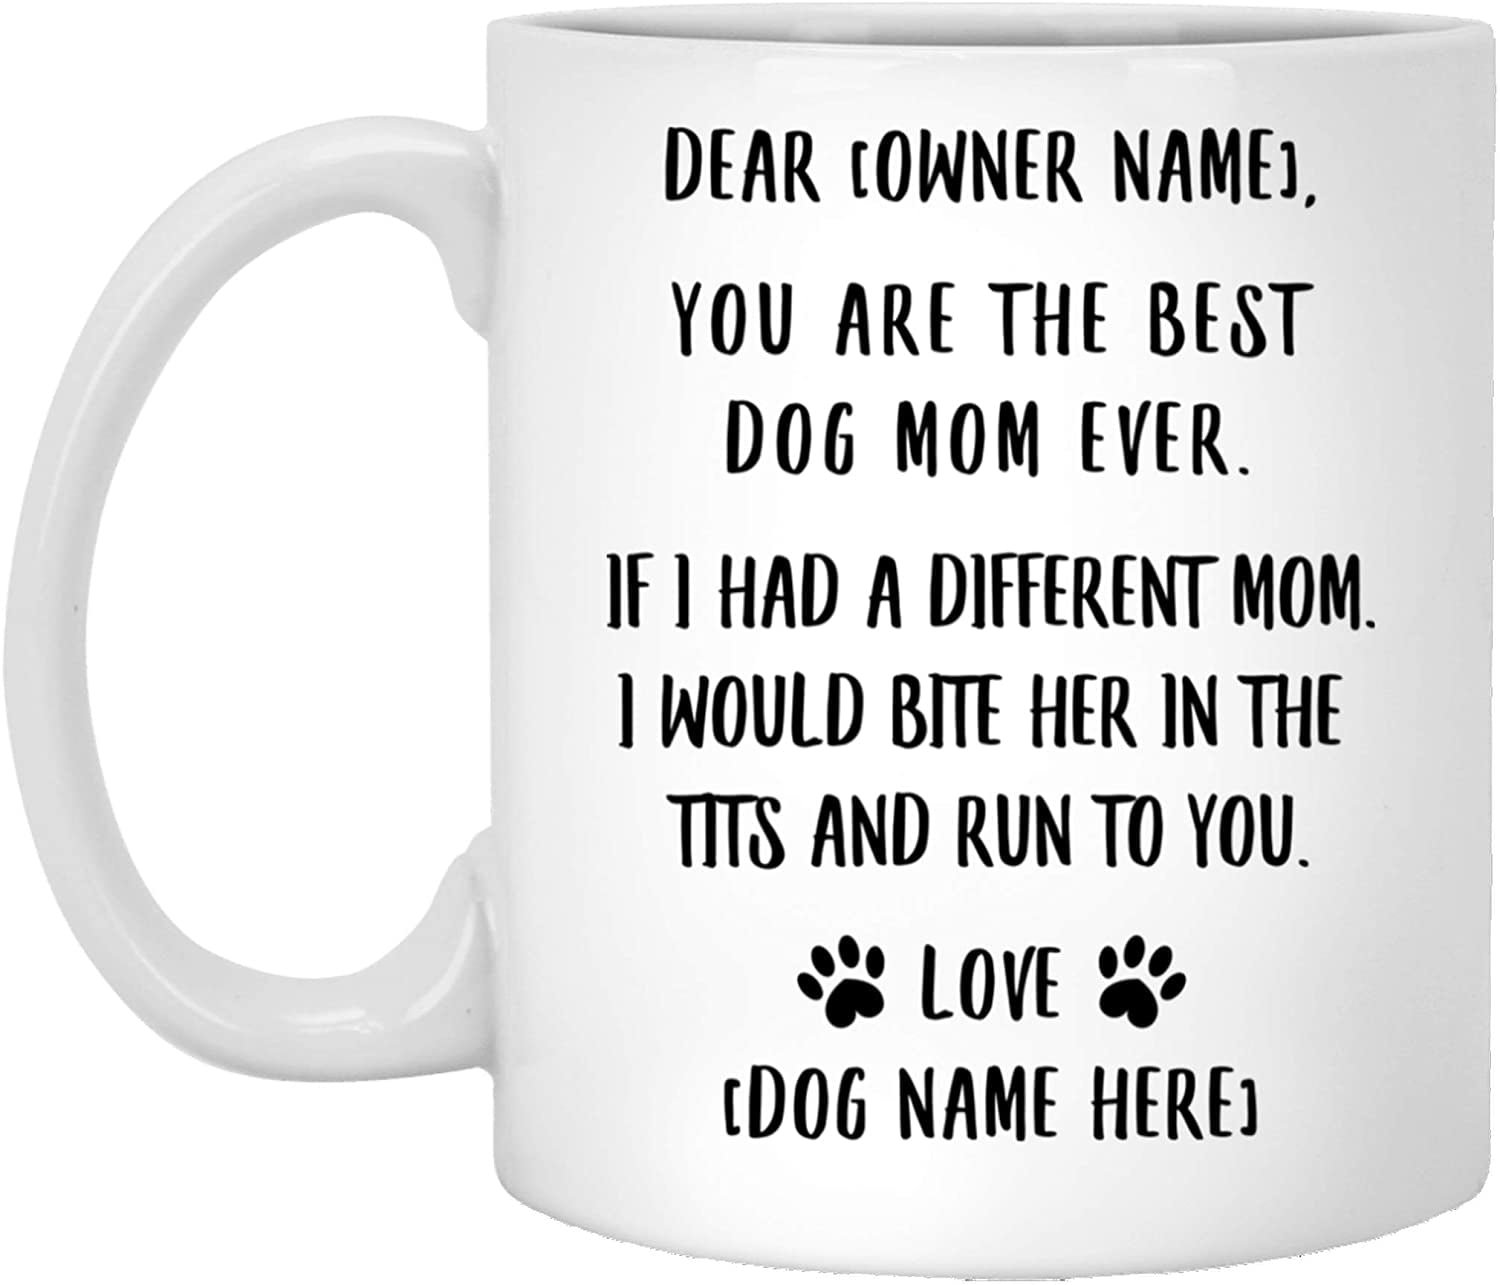 Merry Christmas To The Best Dog Mom, Personalized Mug, Christmas